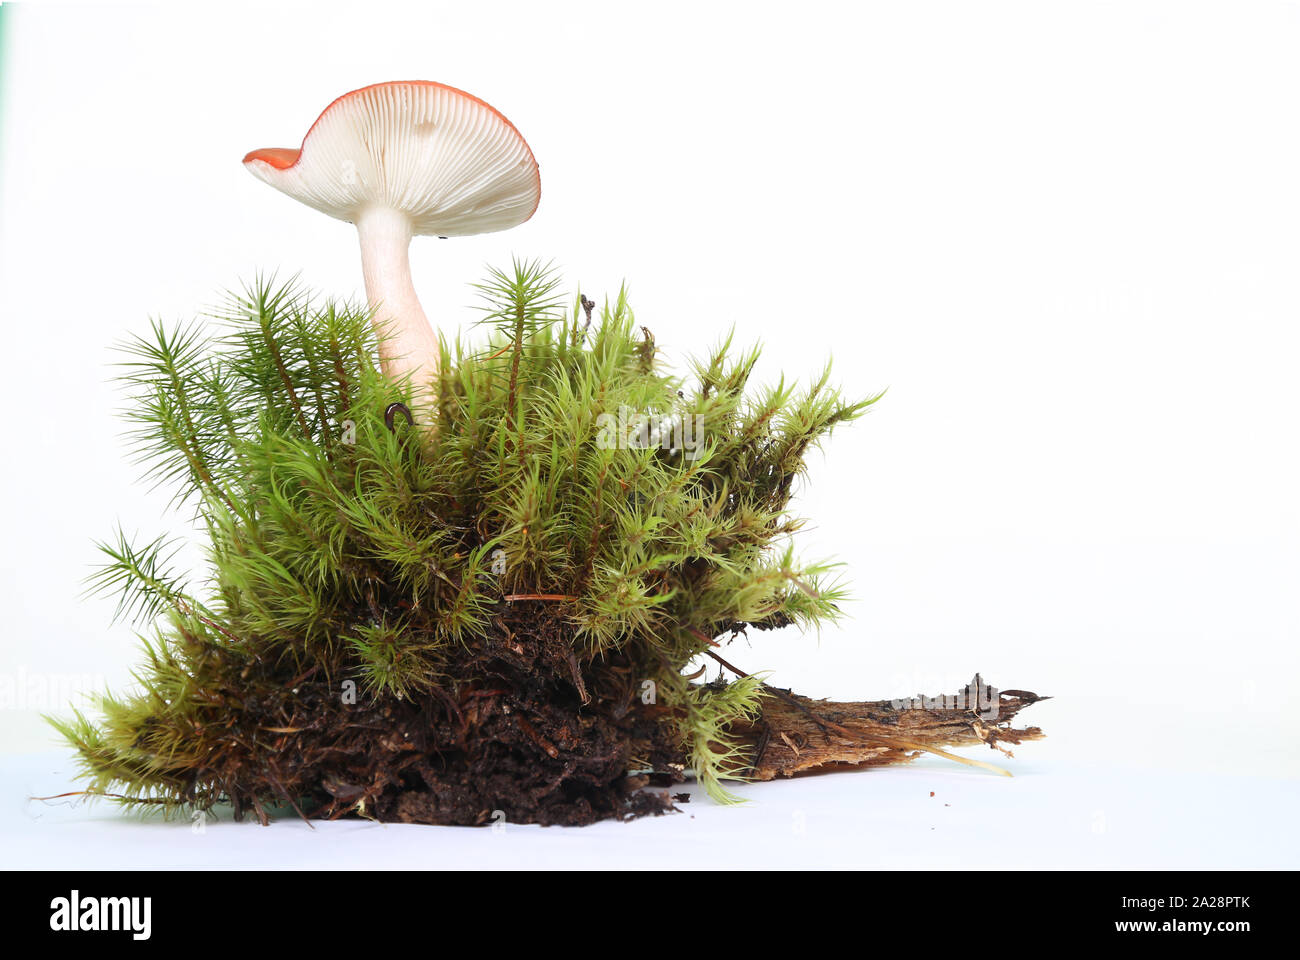 Isolated mushroom over white with green moss, enchanted fairytale mushroom Stock Photo